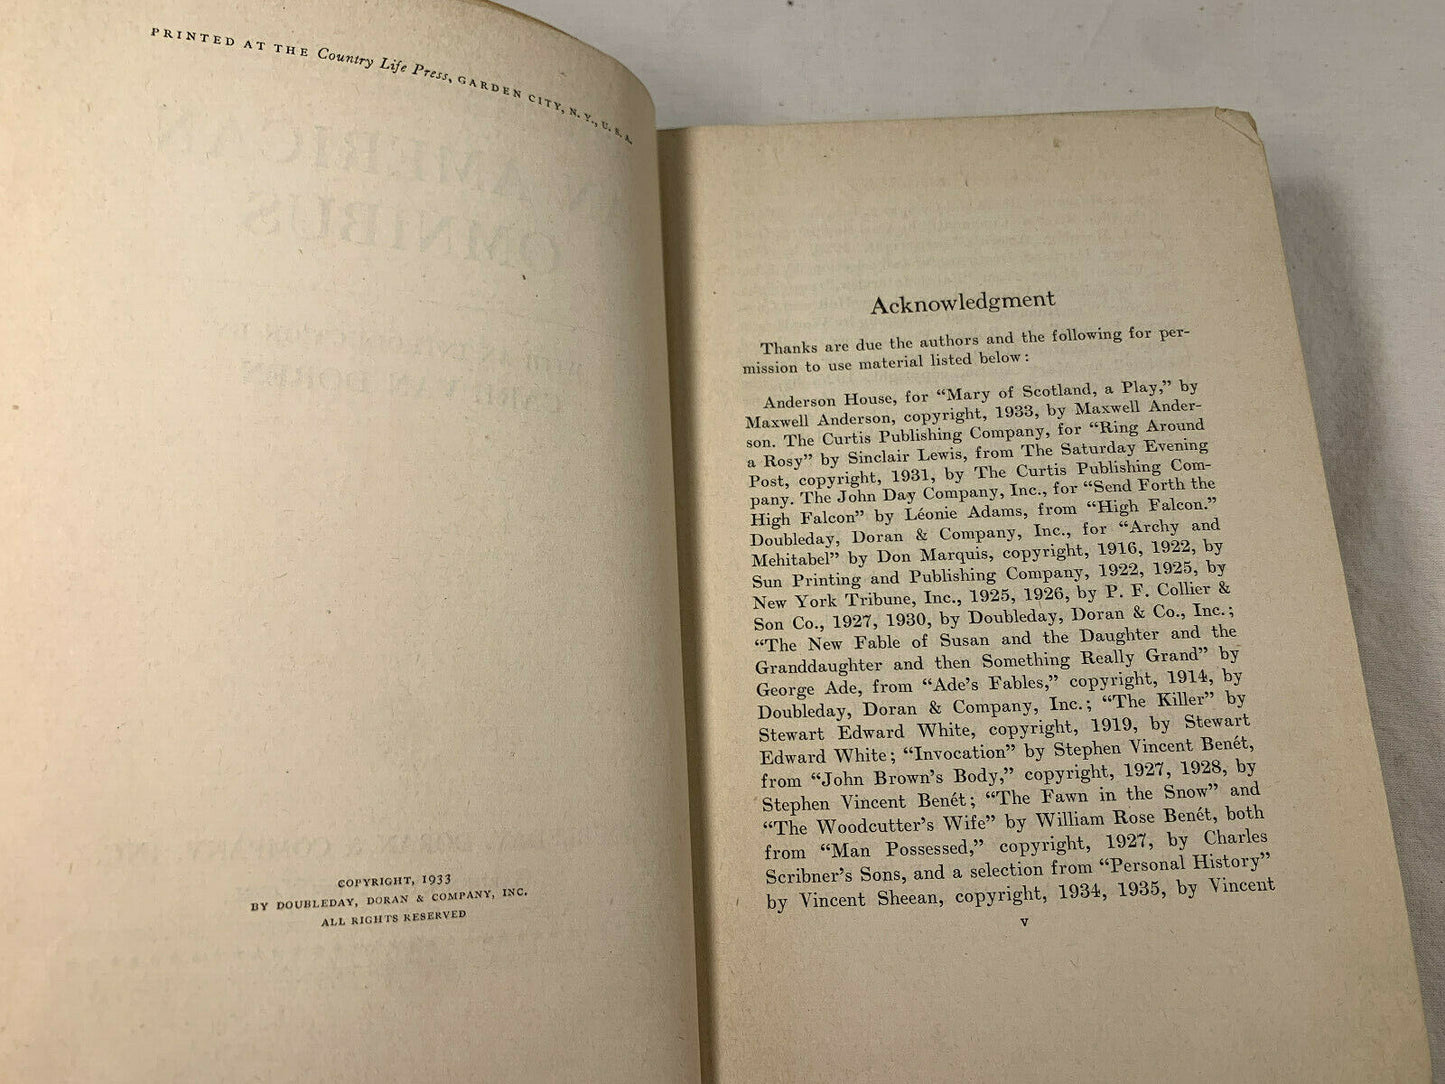 An American Omnibus with intro by Carl Van Doren 1933 Hardcover